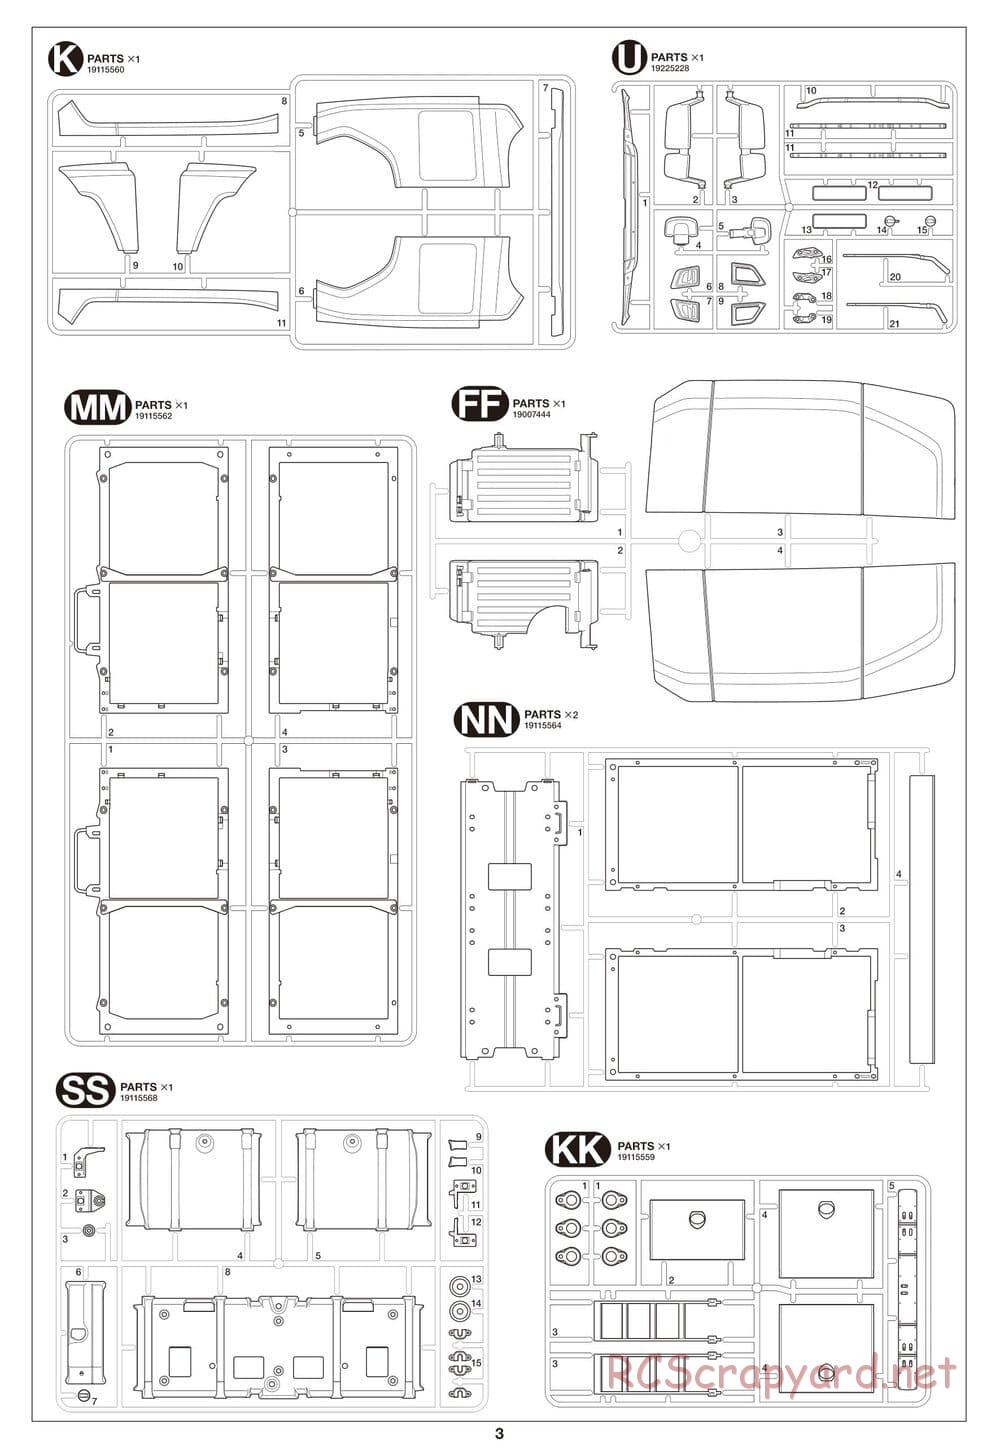 Tamiya - Scania 770 S 8x4/4 Chassis - Parts Manual - Page 3